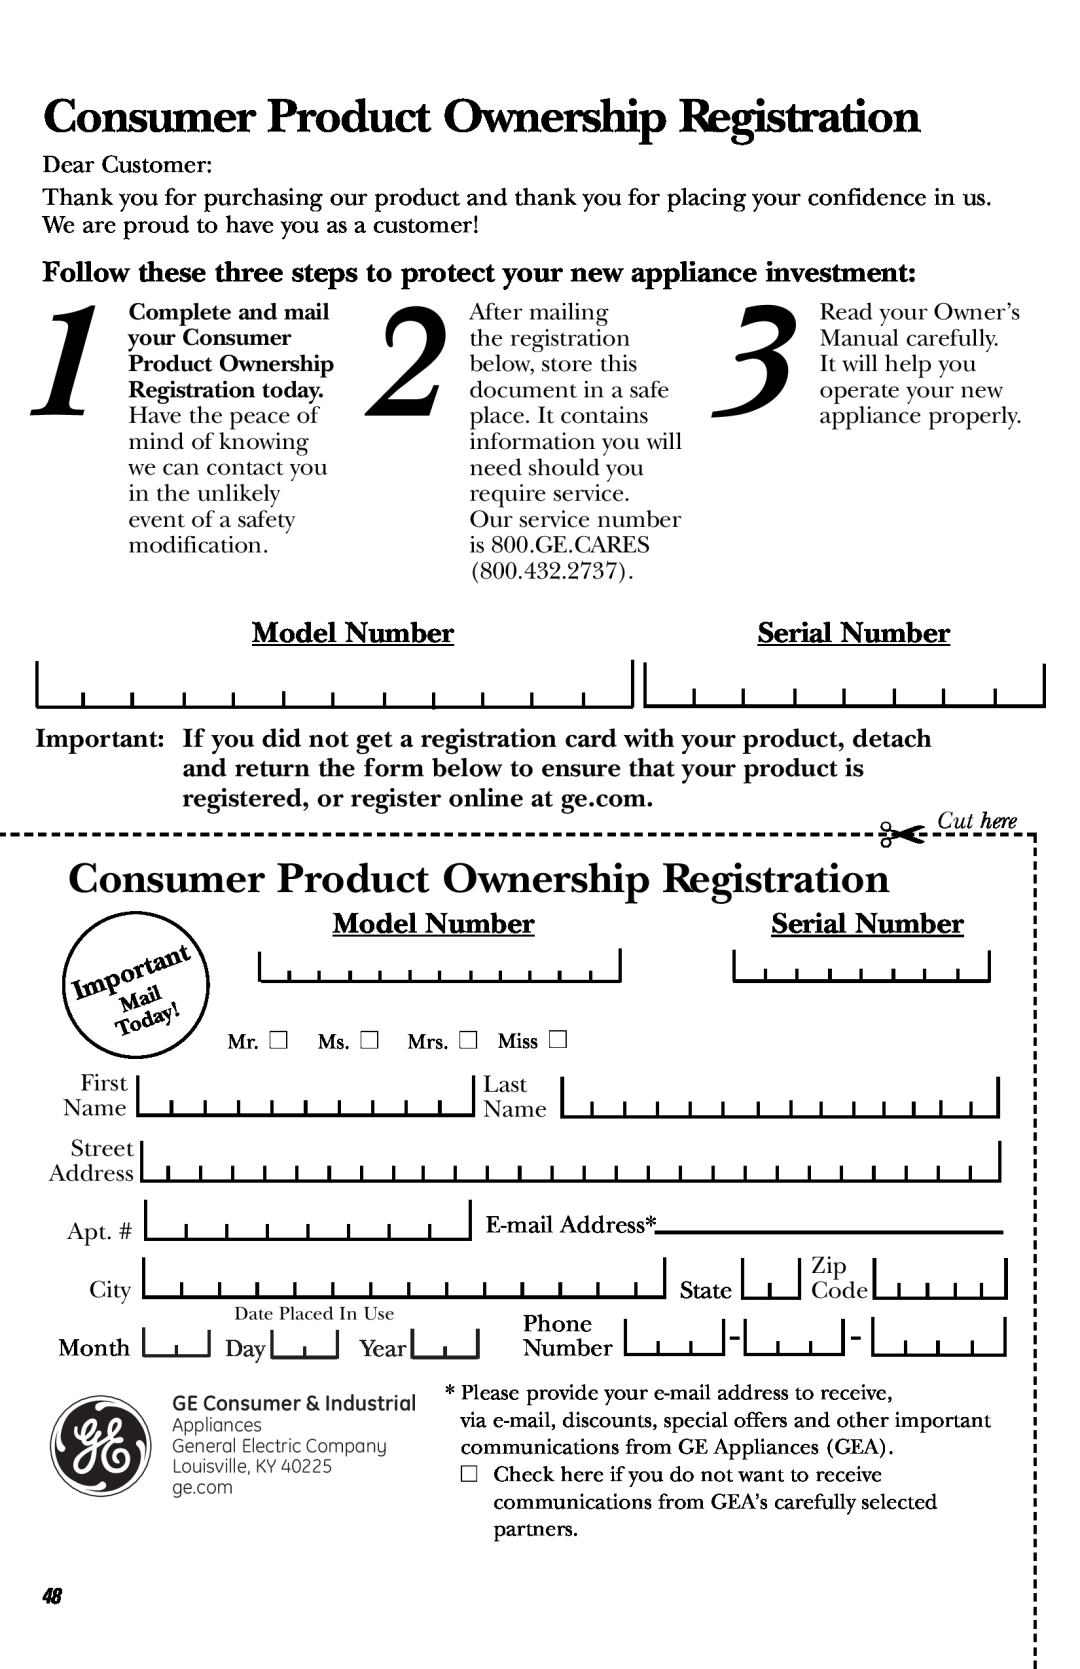 GE JVM1660 owner manual Consumer Product Ownership Registration, Model Number, Serial Number, Cut here 